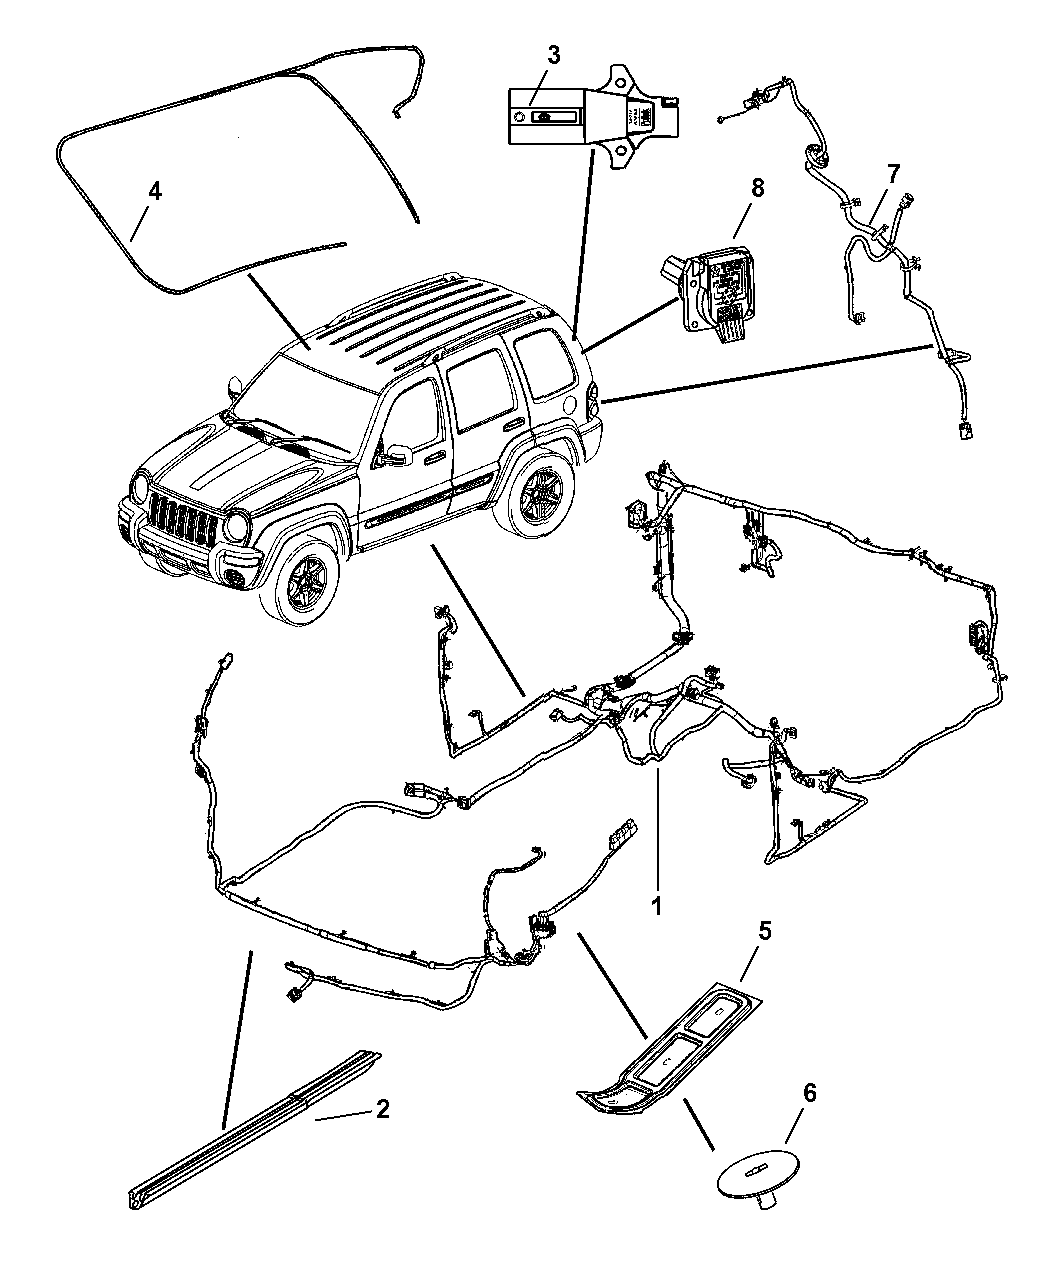 2006 Jeep Liberty Wiring Diagram - Cars Wiring Diagram